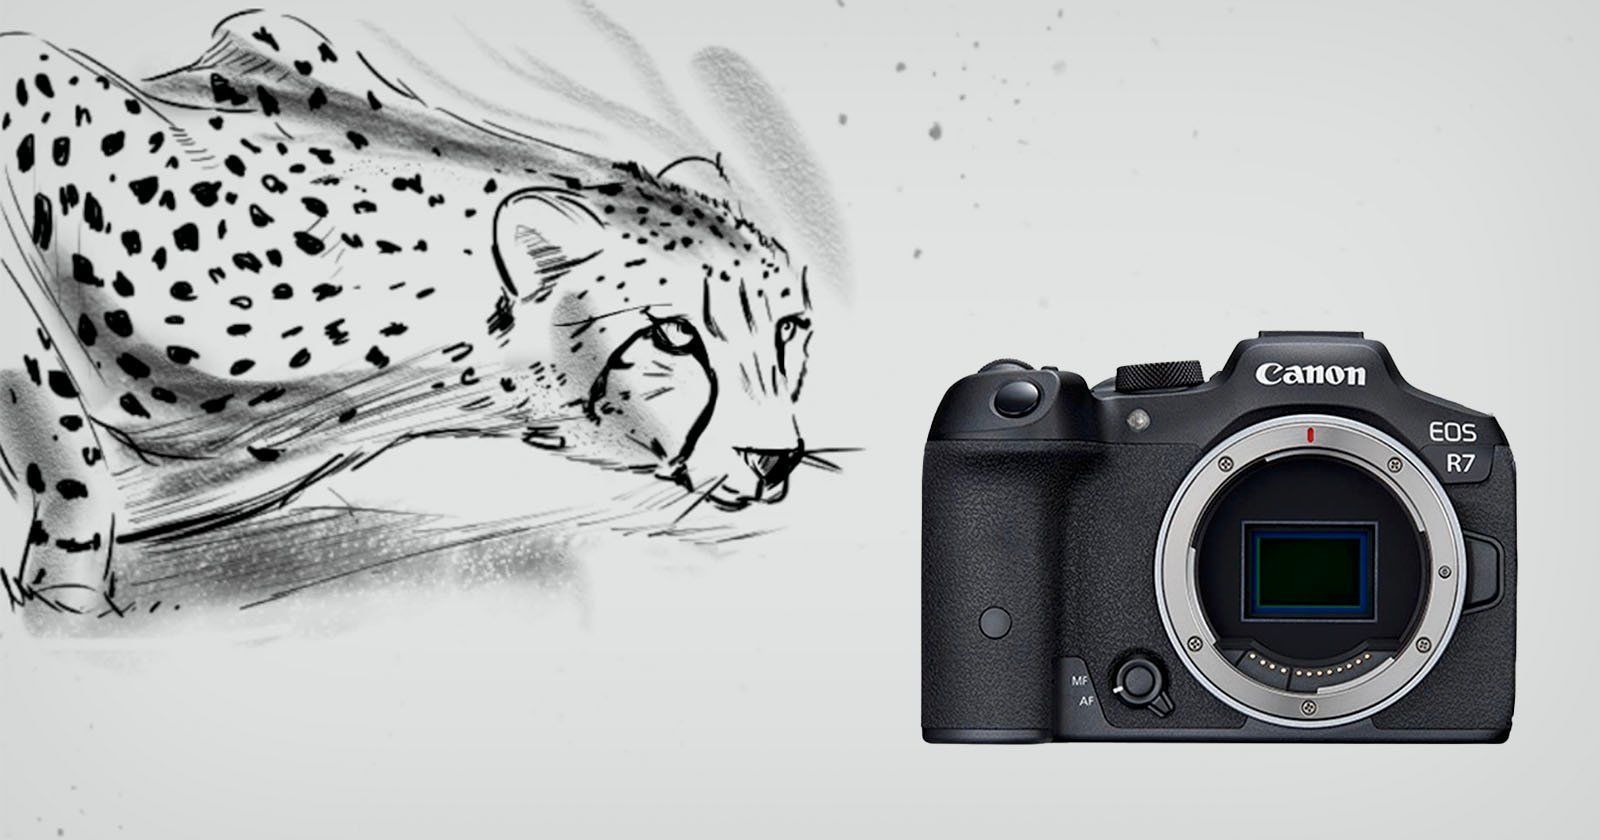 A Cheetah Preparing to Strike Inspired the Canon EOS R7’s Design